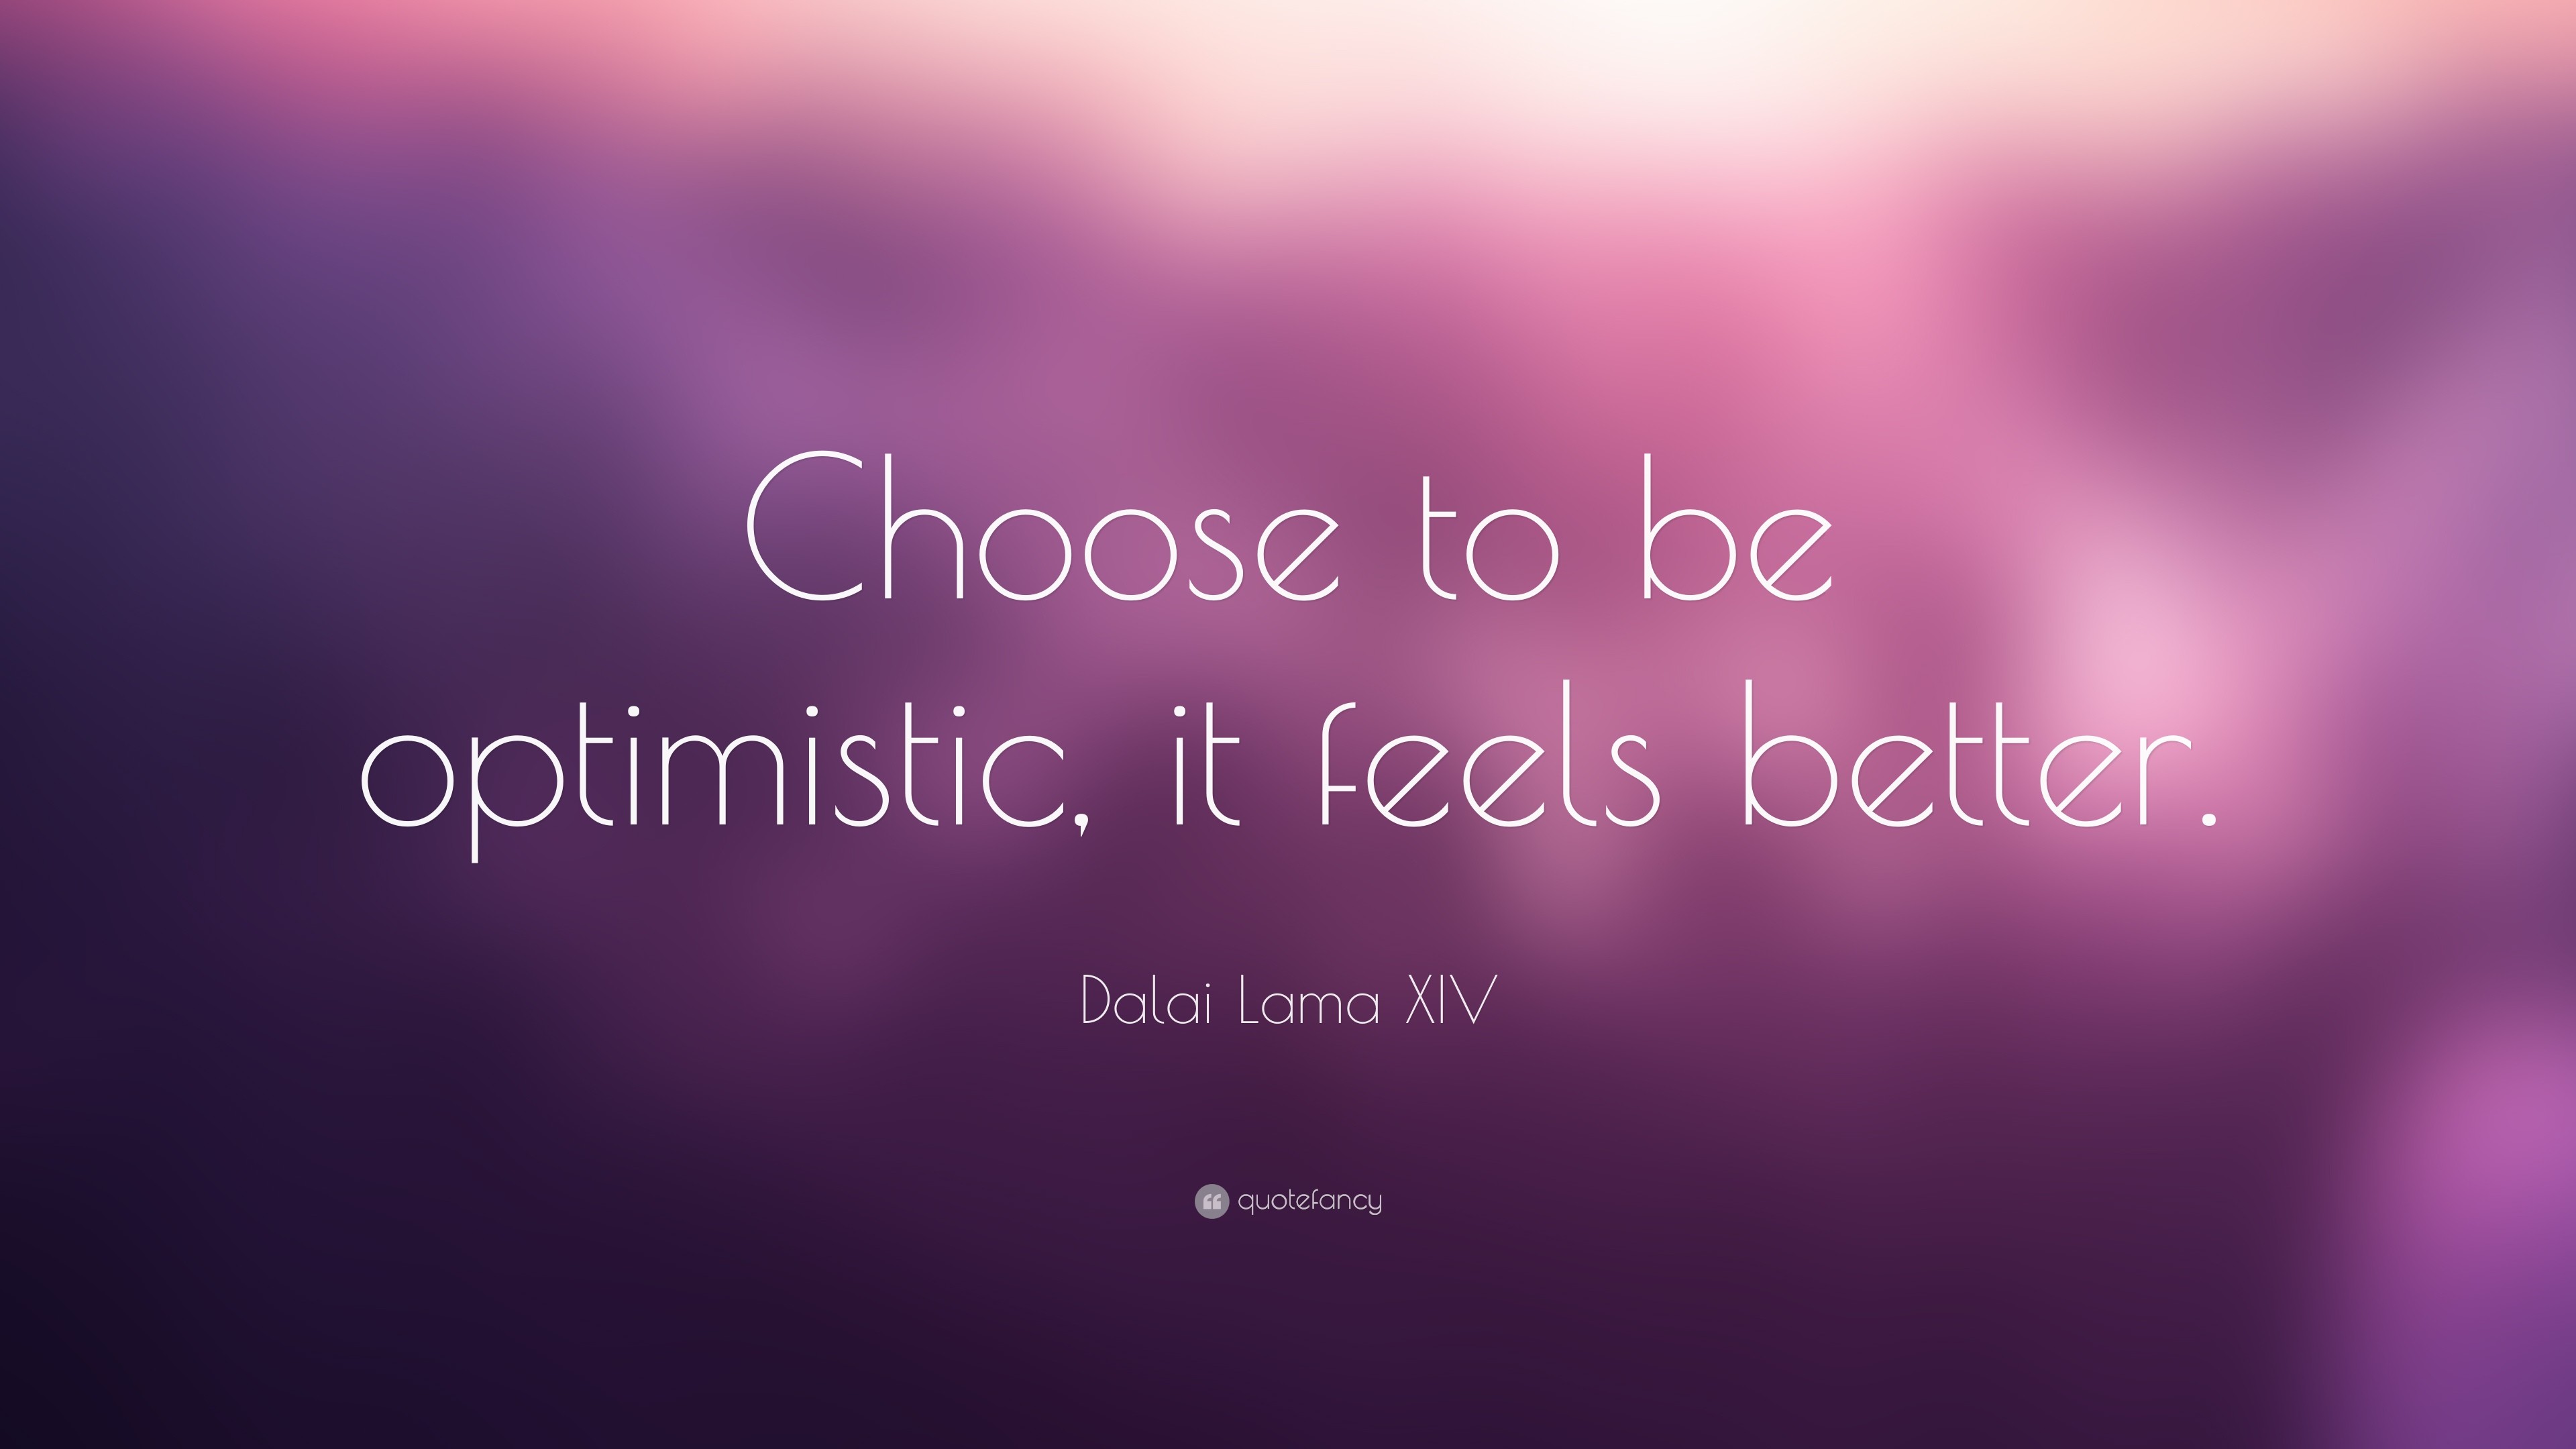 3840x2160 Dalai Lama XIV Quote: “Choose to be optimistic, it feels better.”